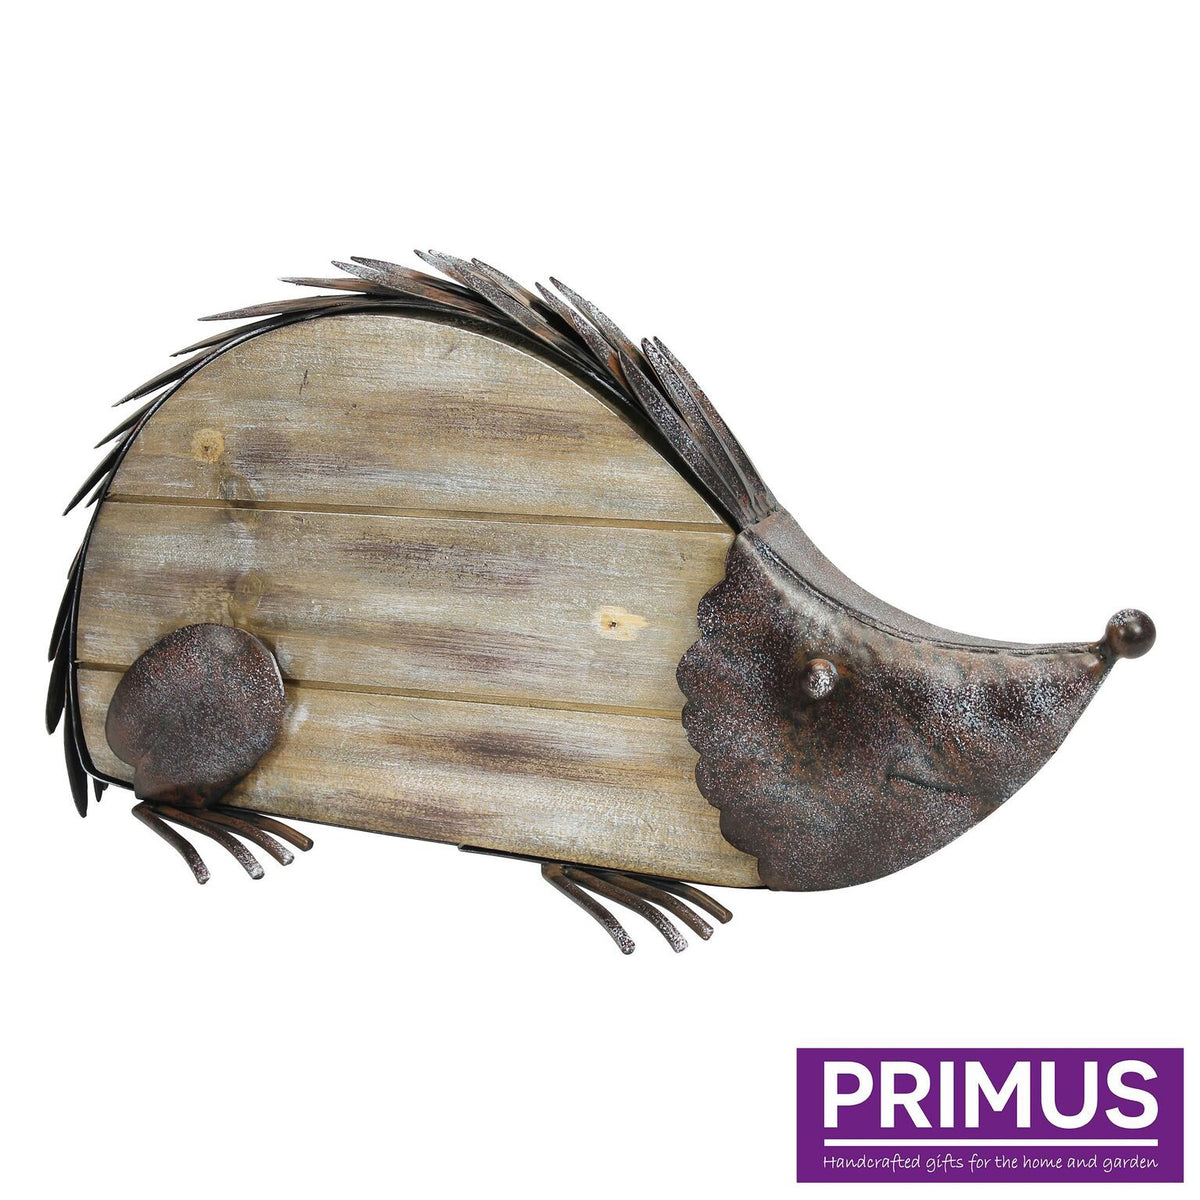 Primus Rustic Hedgehog Garden Ornament